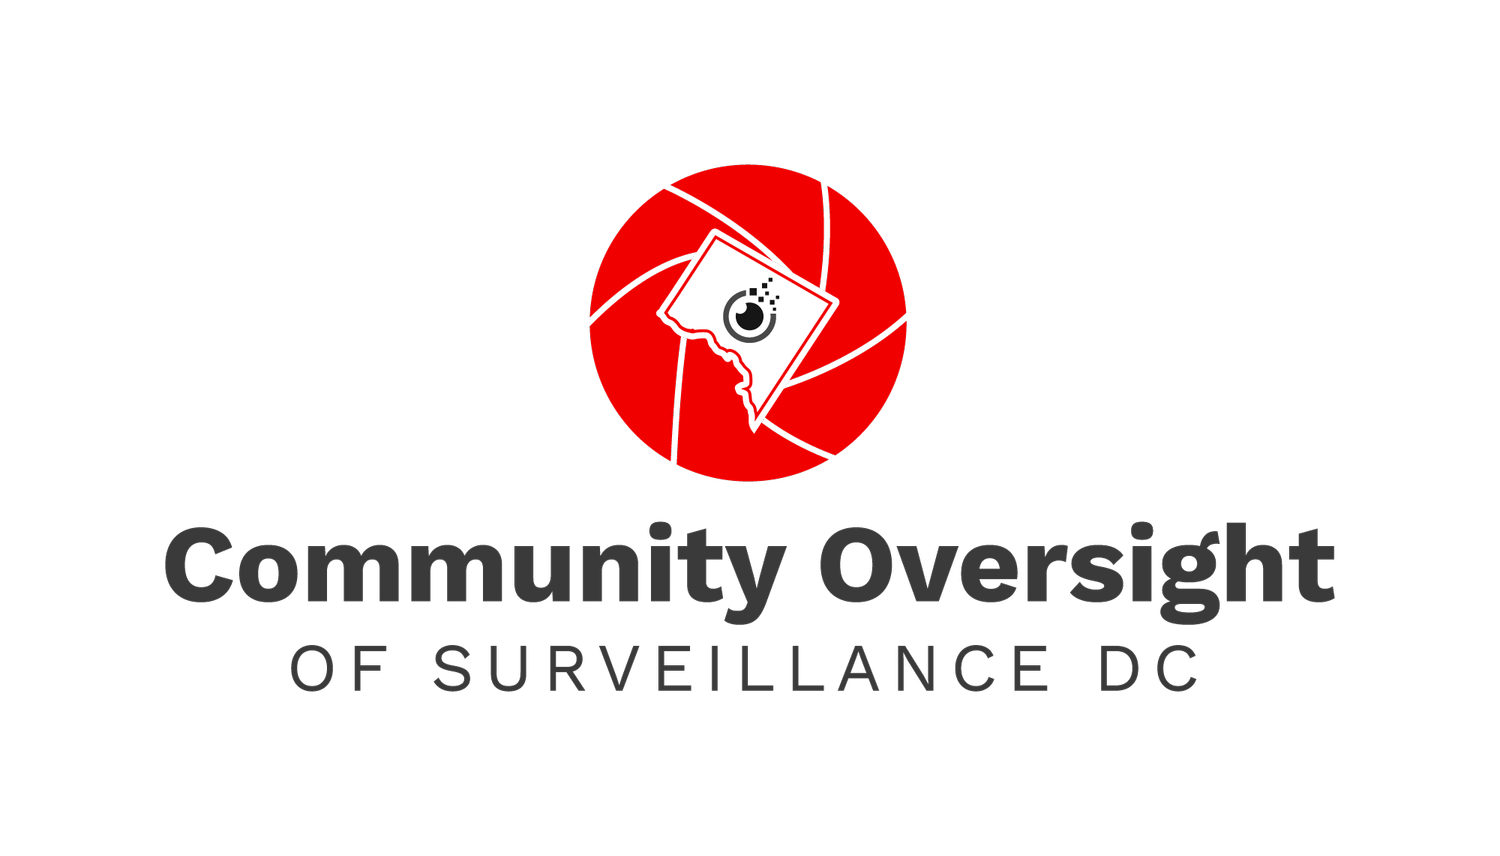 Community Oversight of Surveillance DC